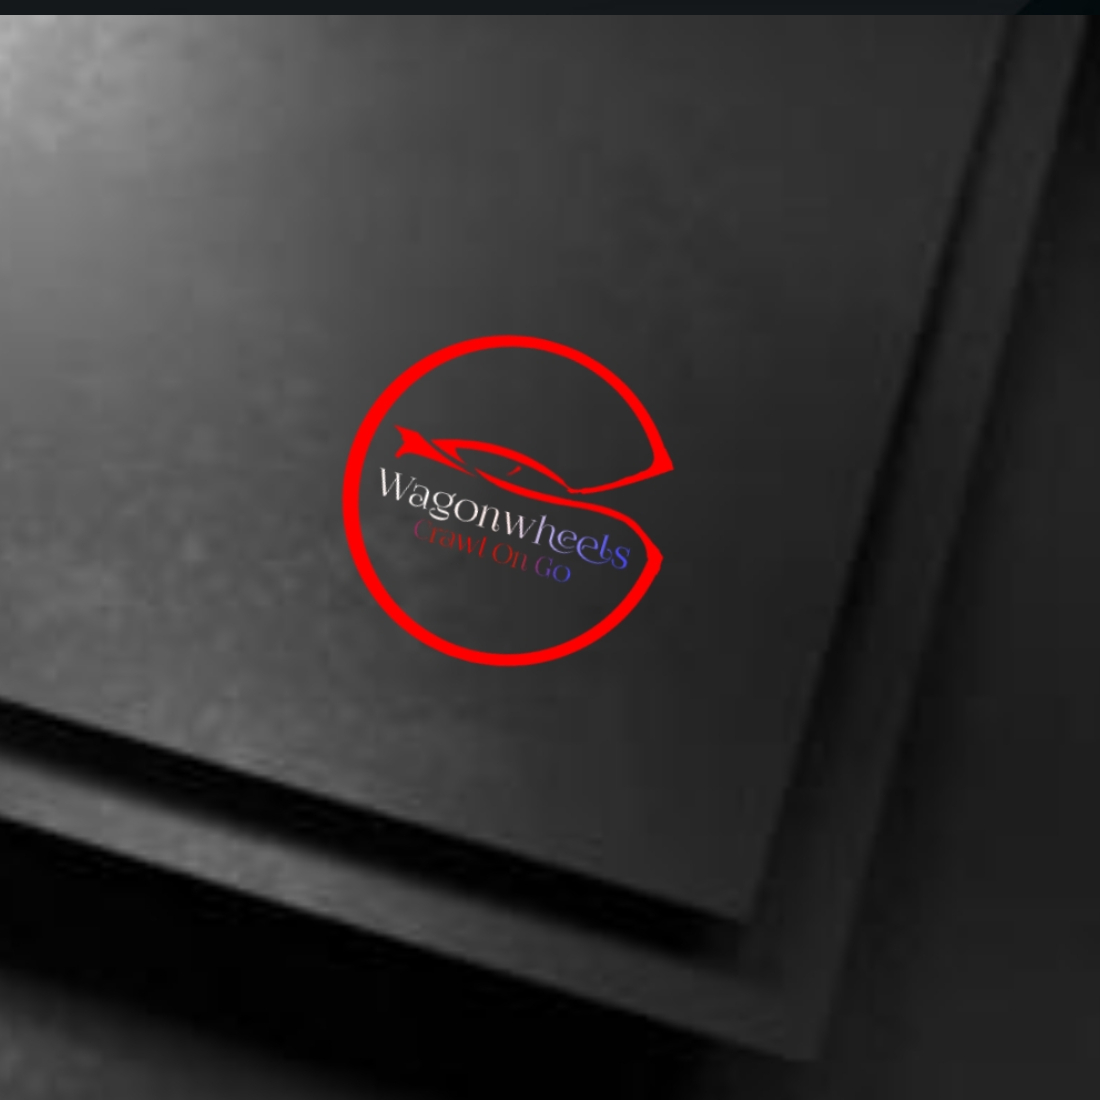 Wagonwheels /company logo preview image.